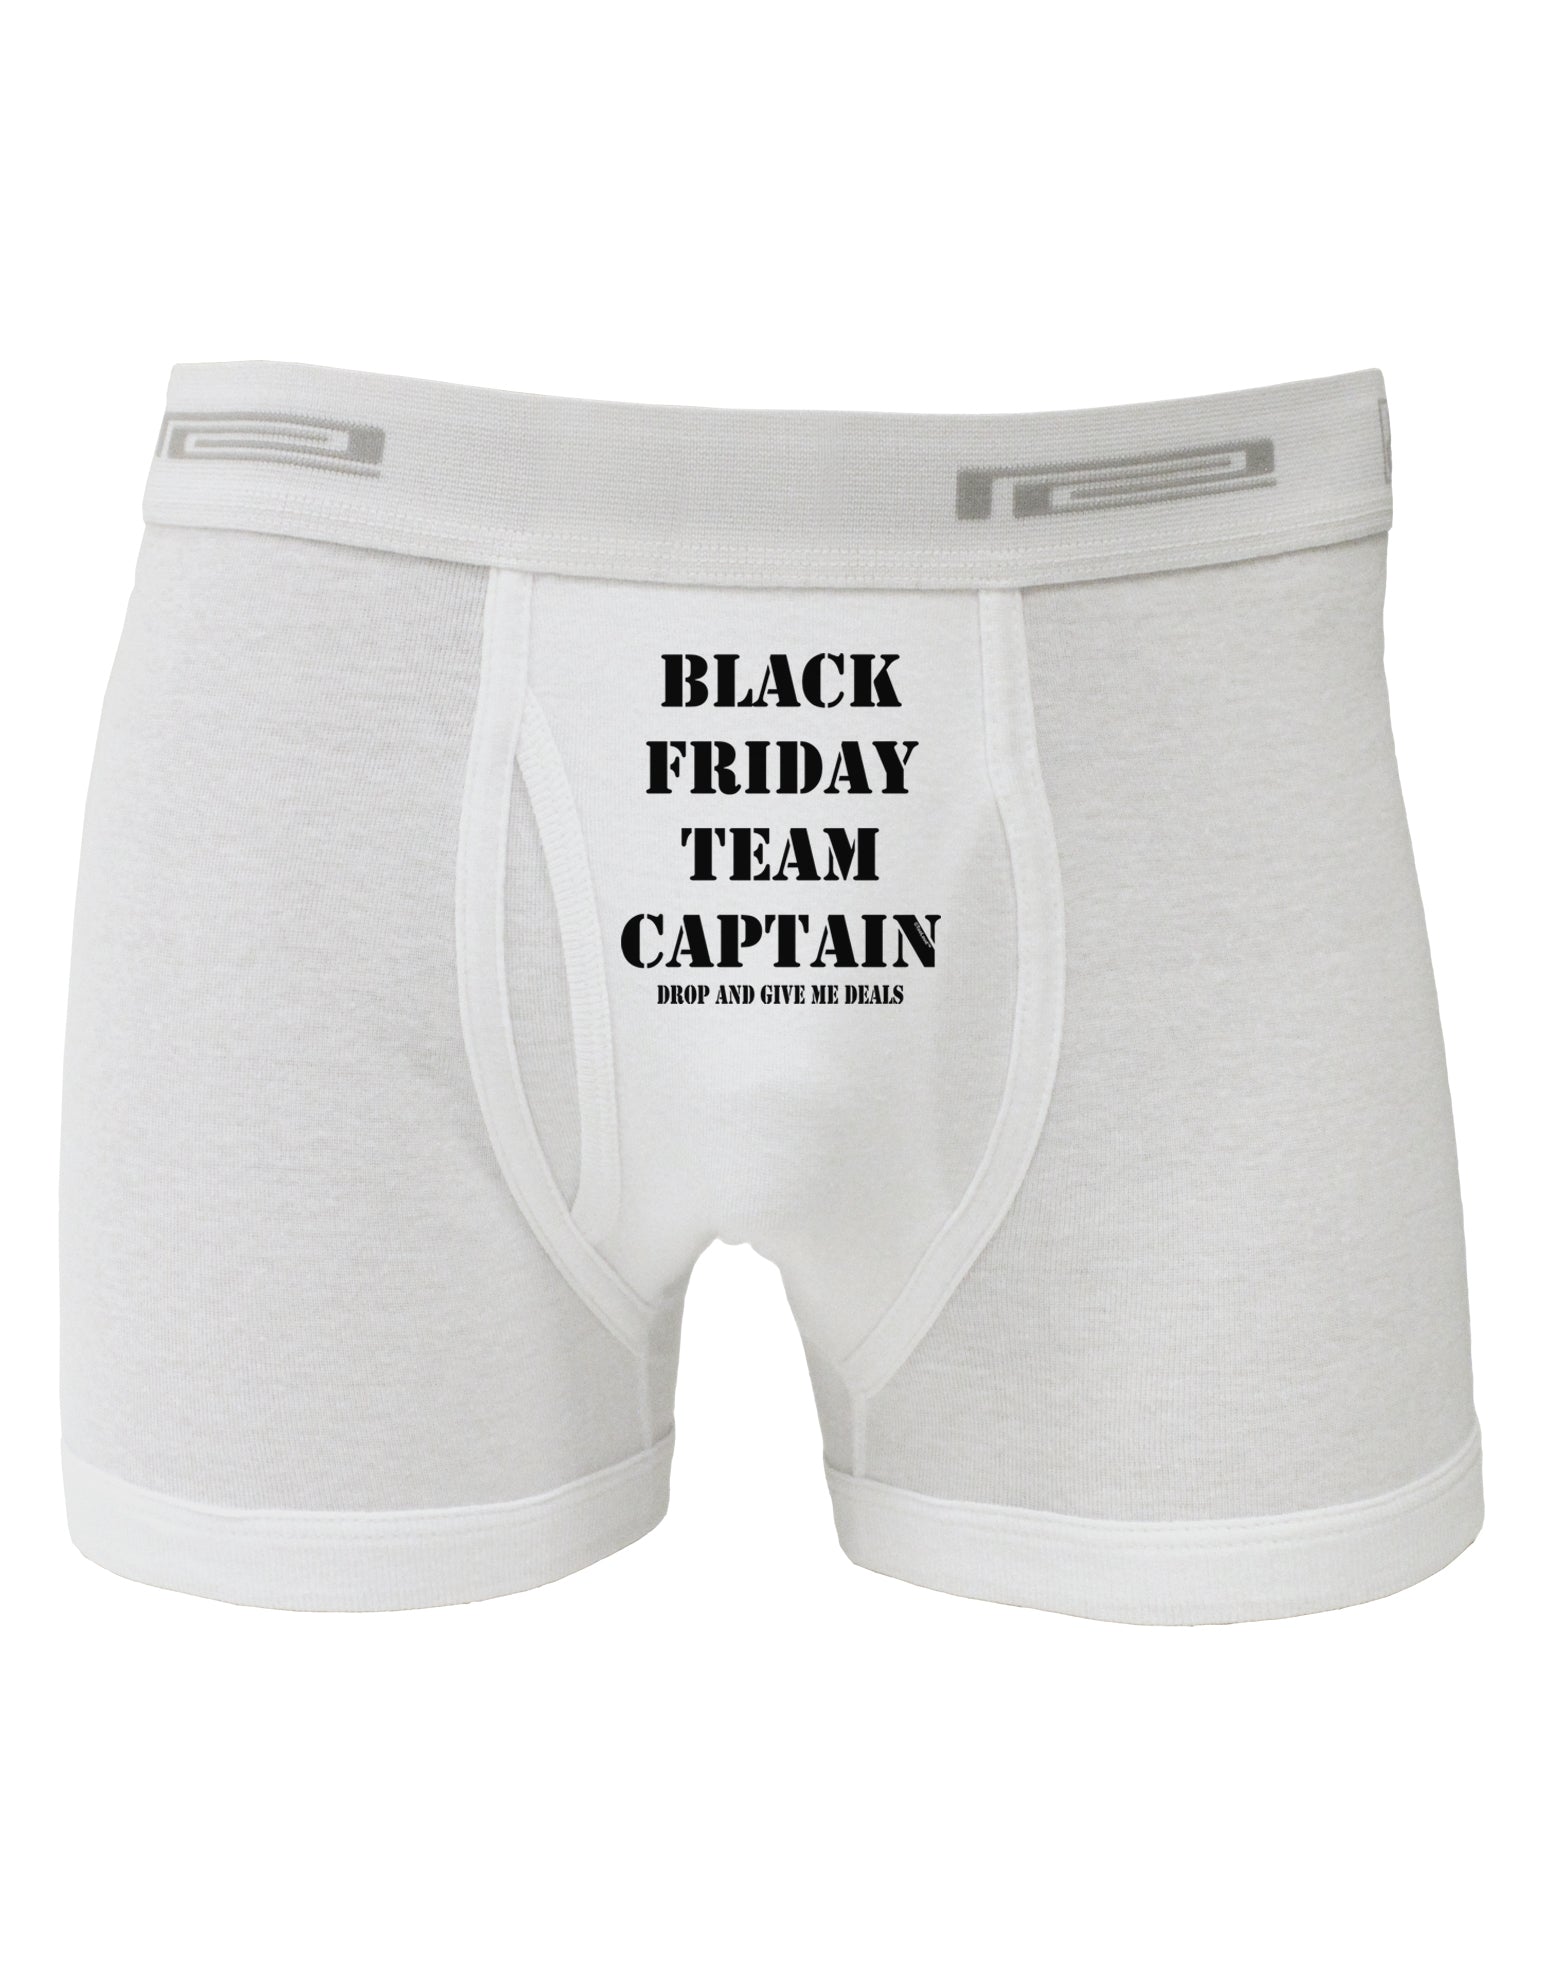 Black Friday Team Captain - Drop and Give Me Deals Boxer Briefs